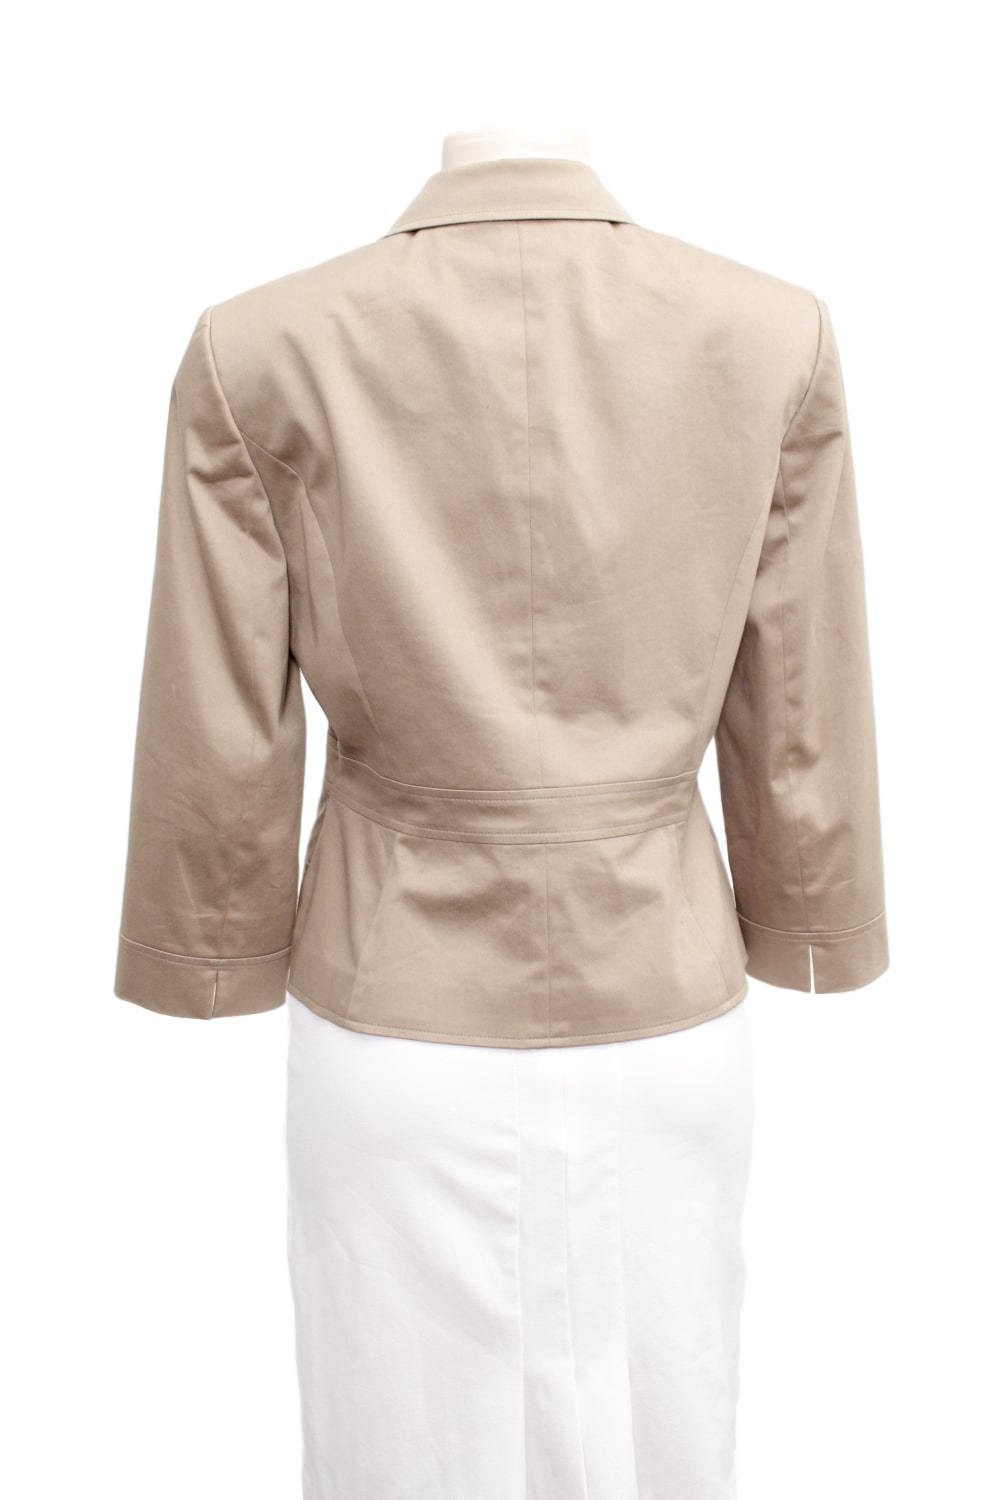 Tahari Lightweight Jacket -Back- eKlozet Luxury Consignment